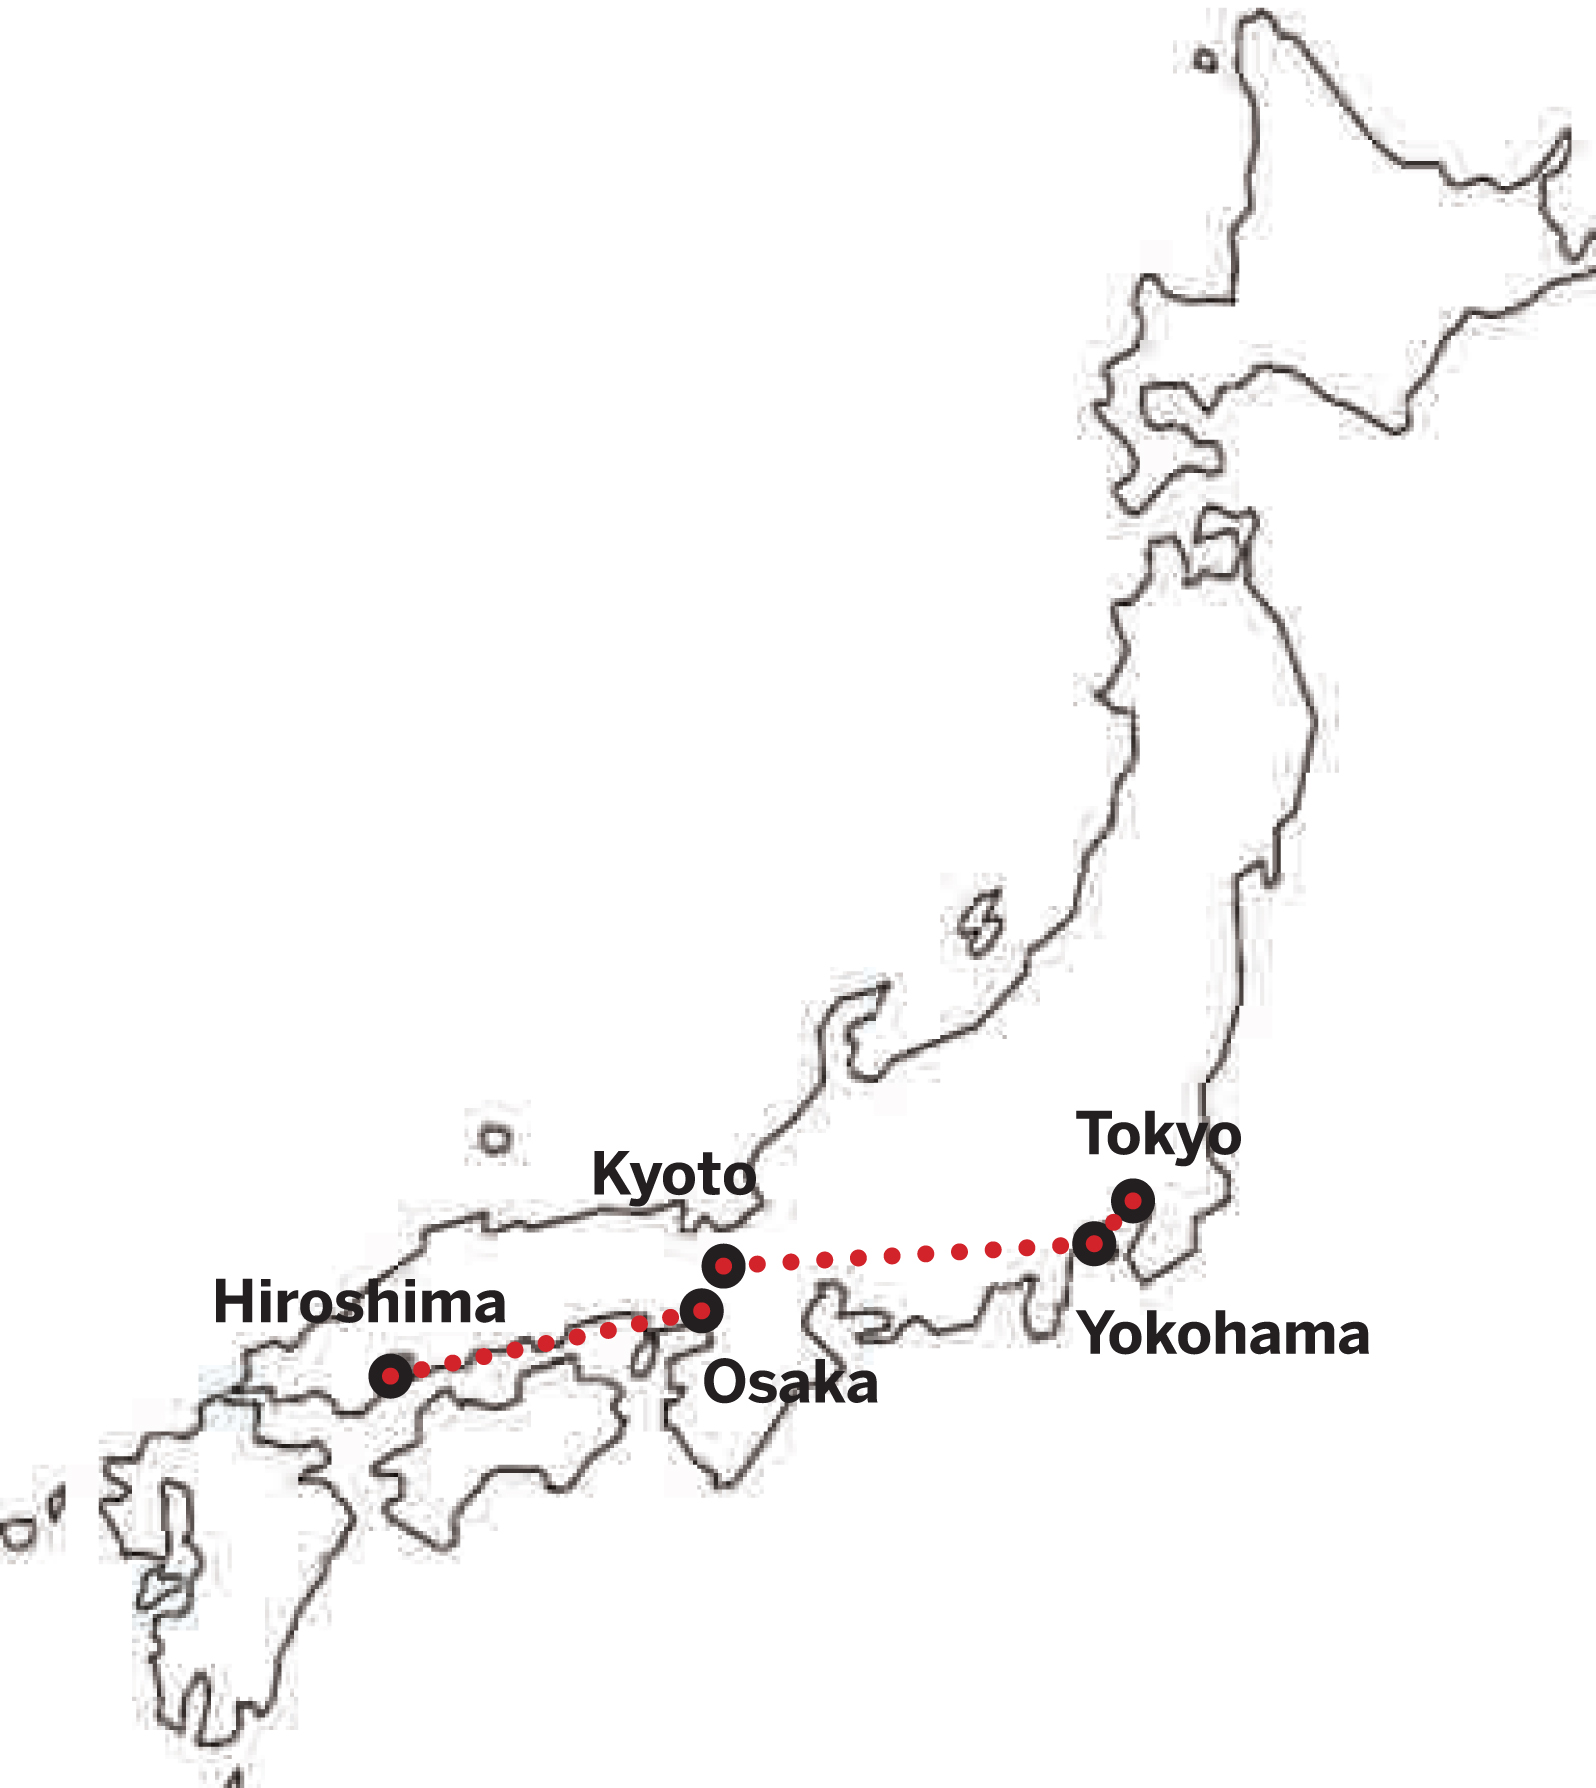 Japan Itinerary